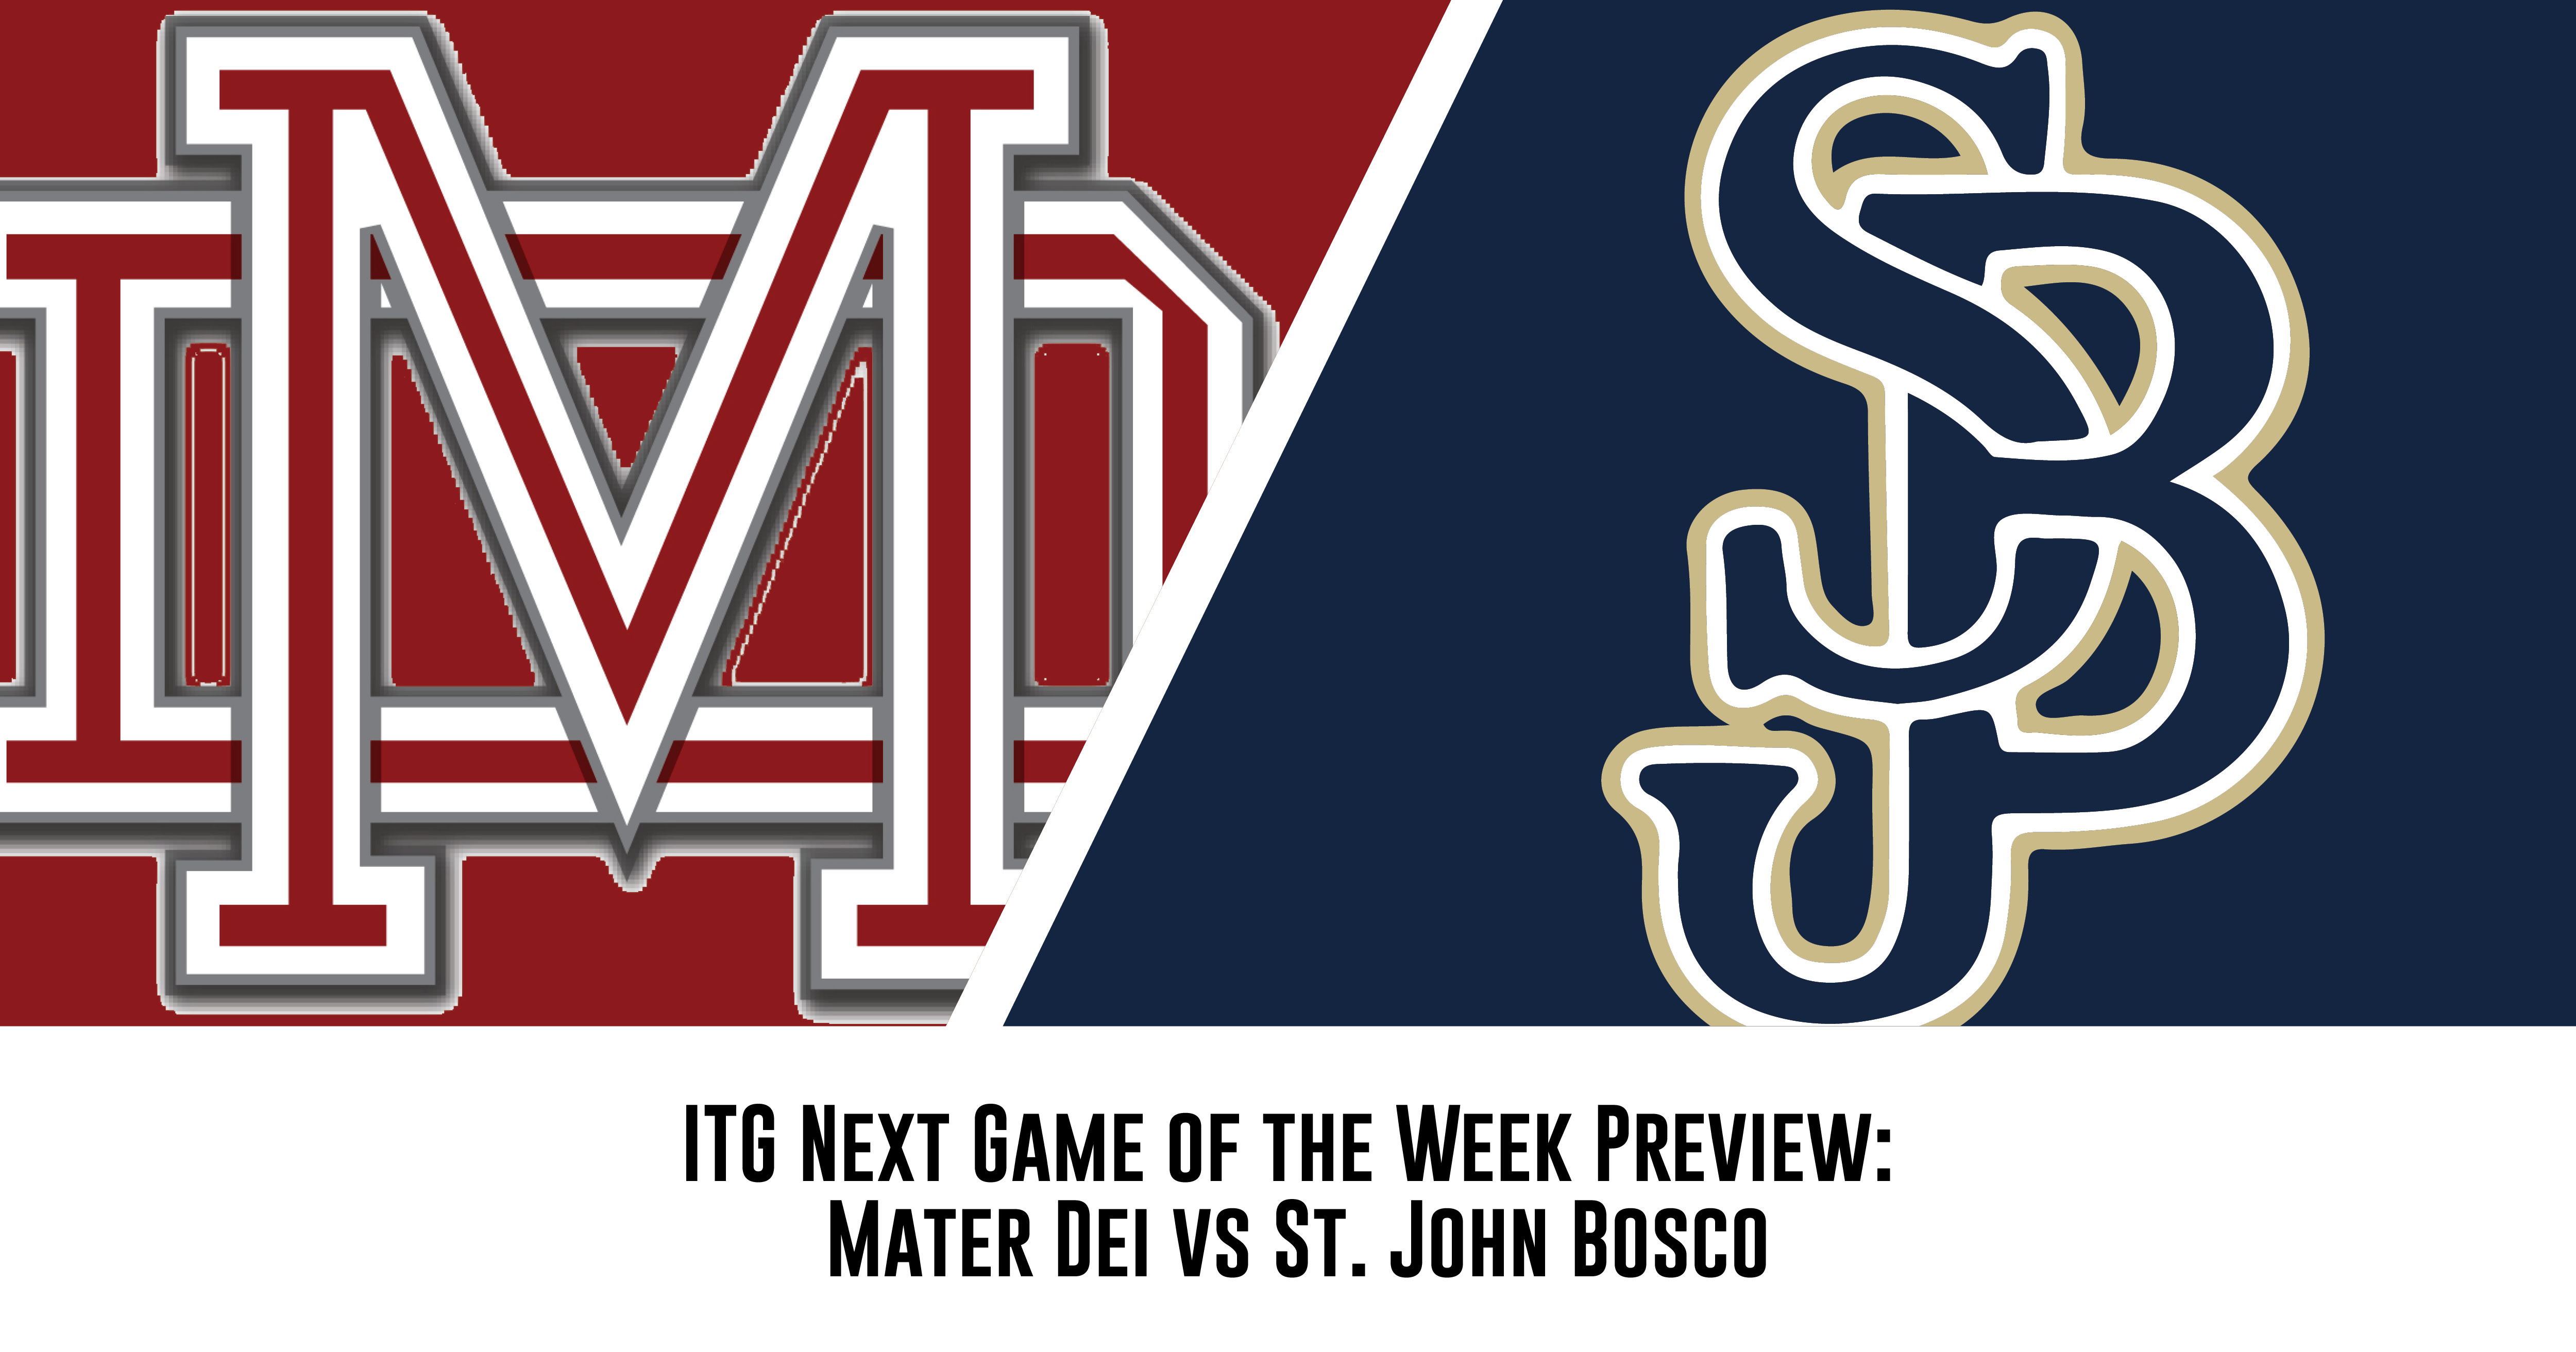 National Game of the Week Preview Mater Dei vs. St. John Bosco ITG Next